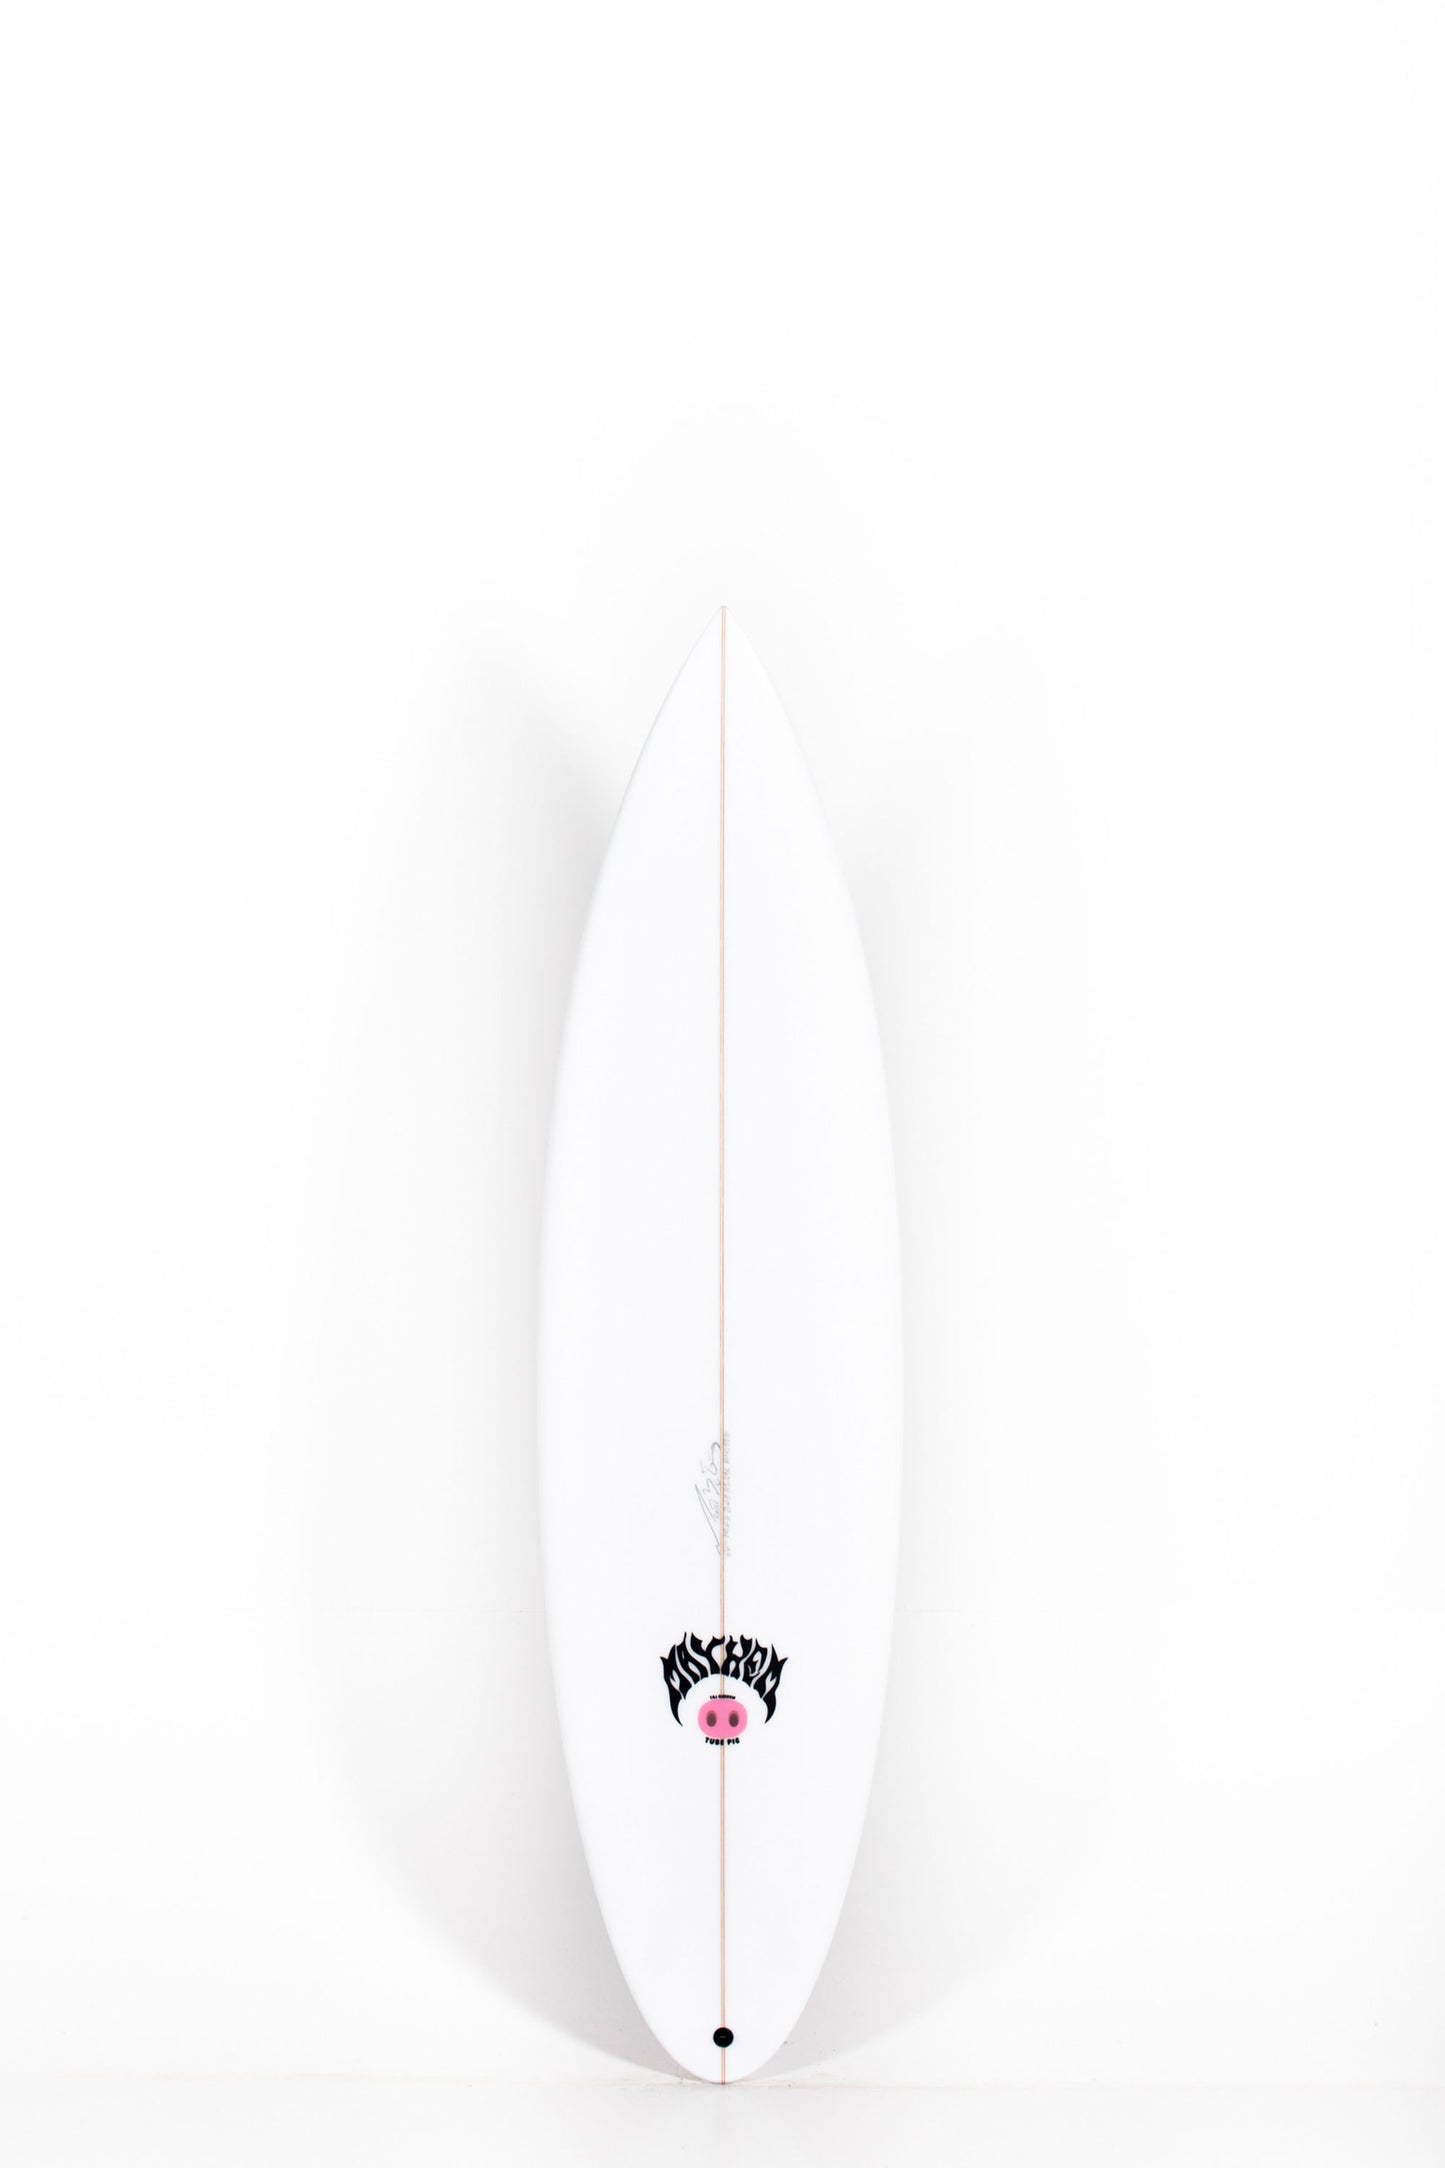 Pukas Surf Shop - Lost Surfboards - TUBE PIG by Matt Biolos - 6’6” x 19,63 x 2,63 - 35,25L - MH12558